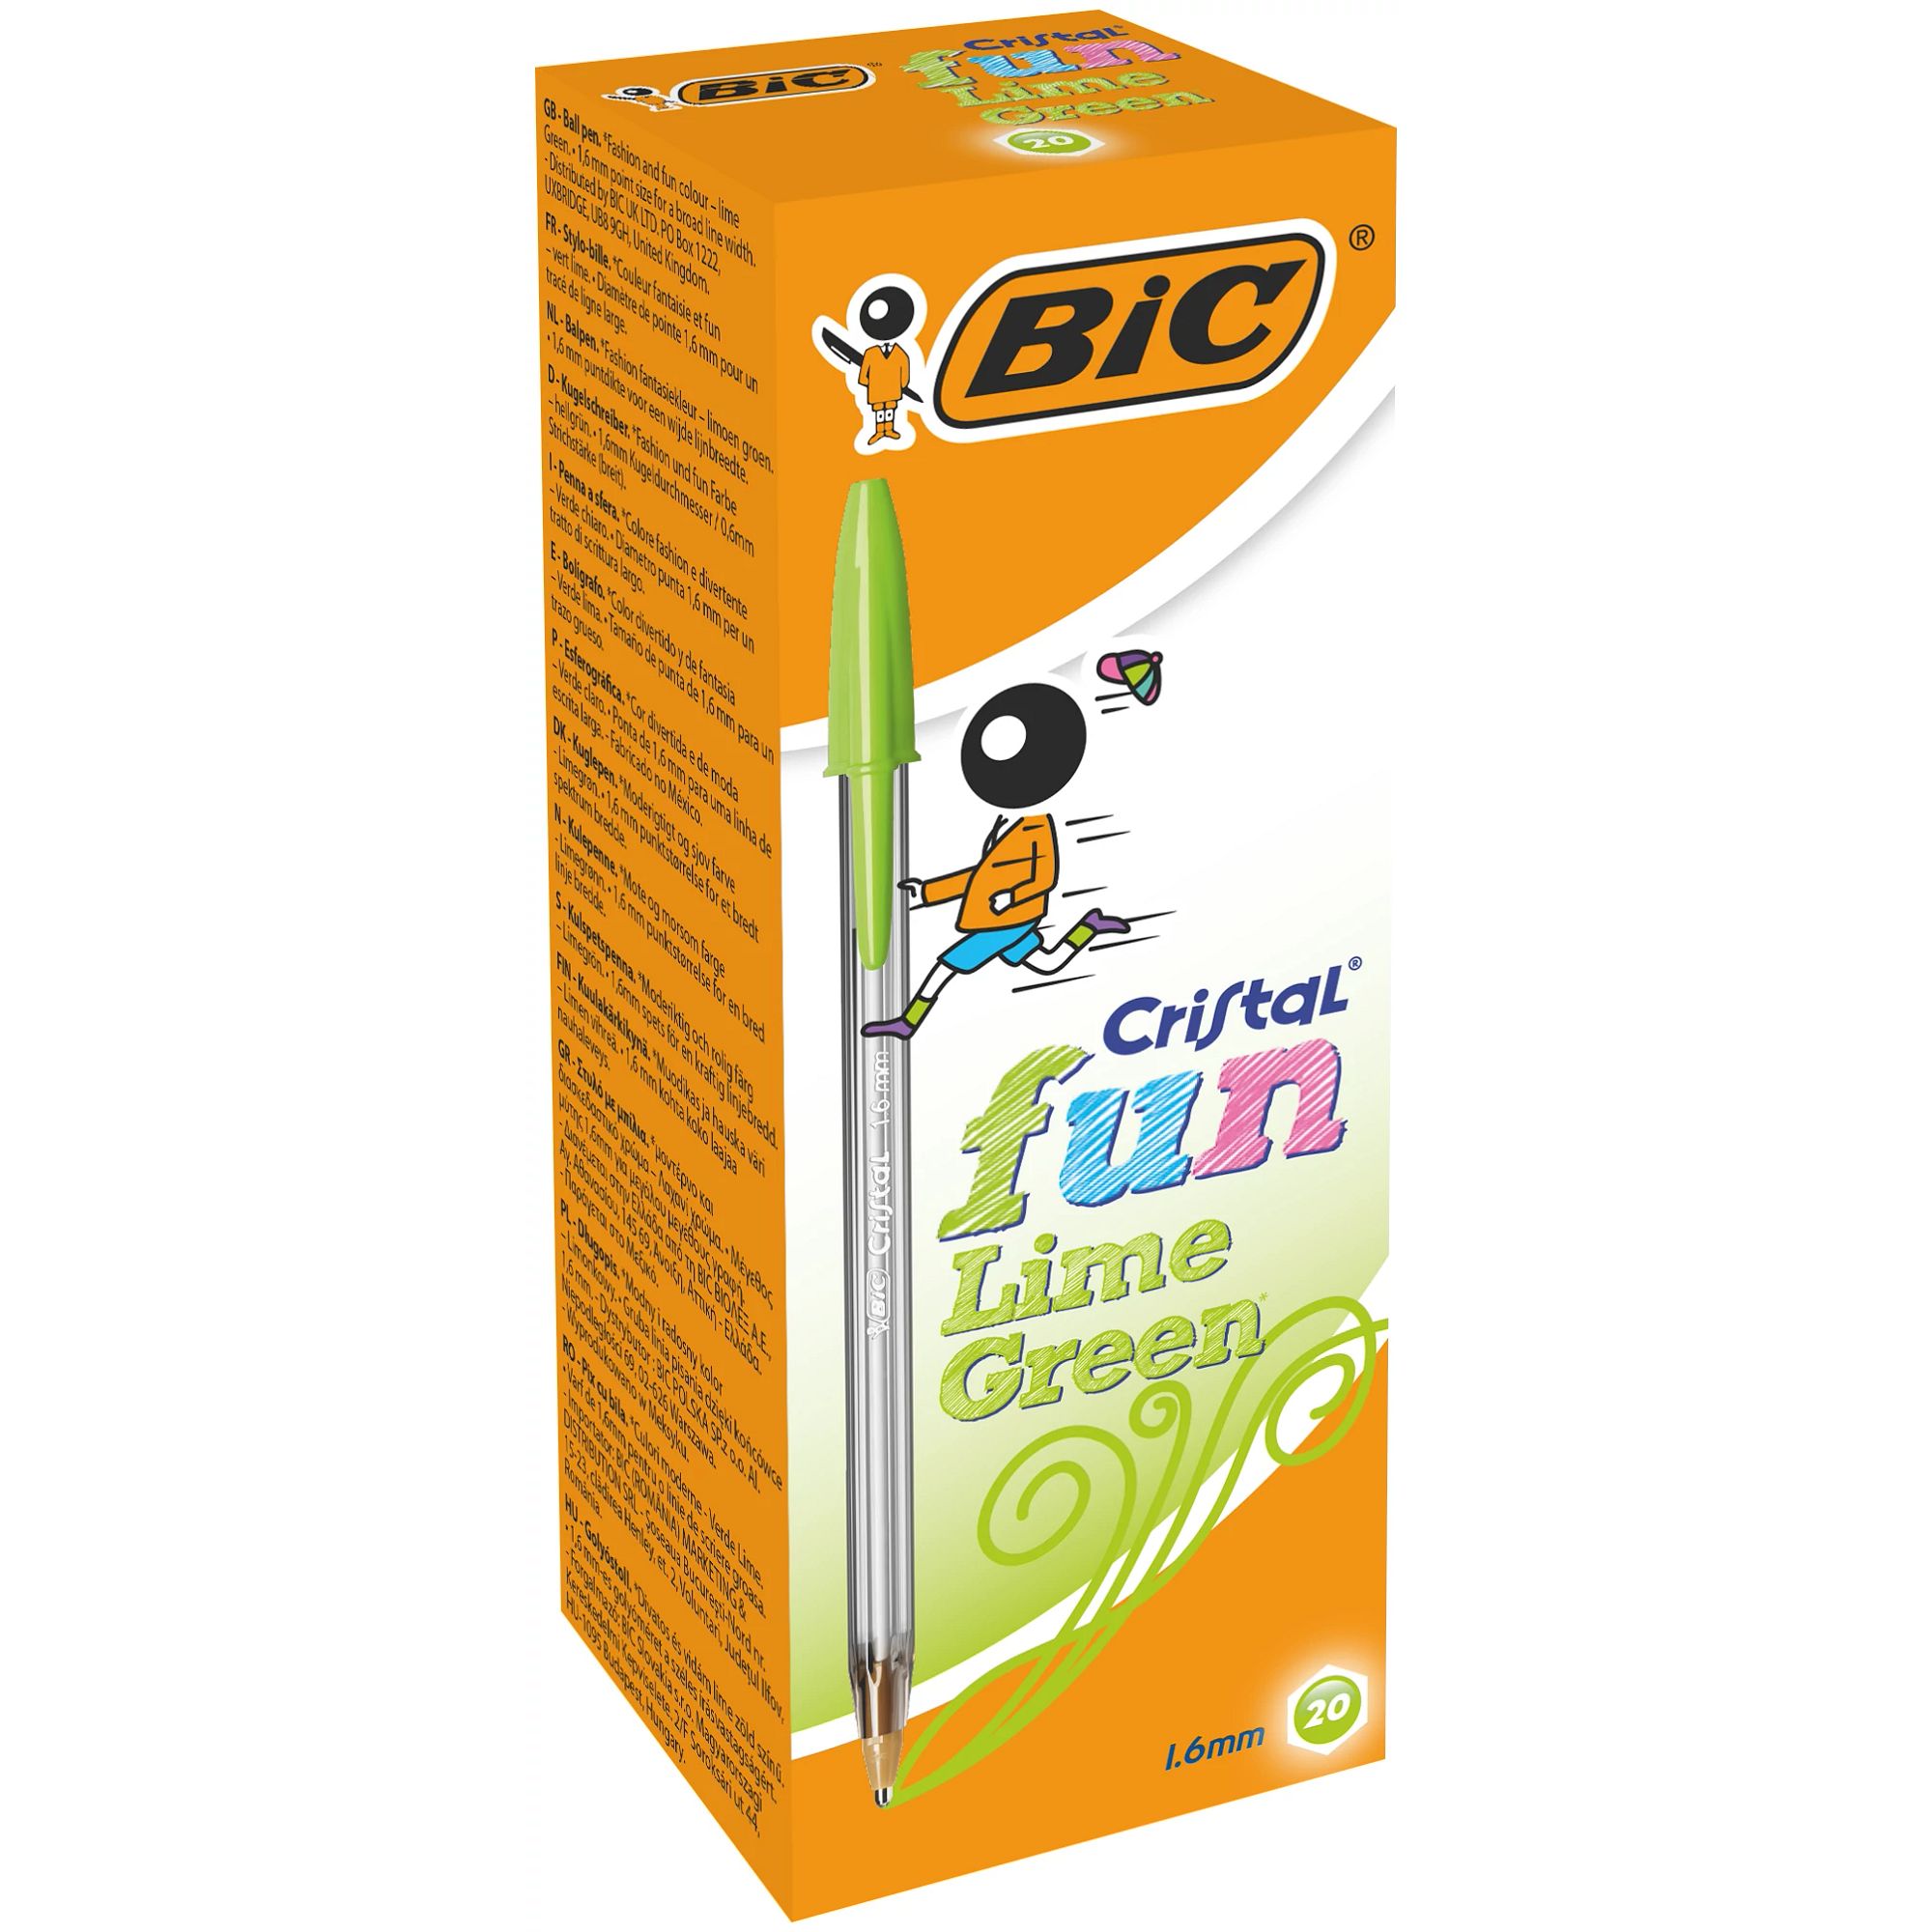 G1319165 - BIC Cristal Fun Ballpoint Pen - Green - Pack of 20